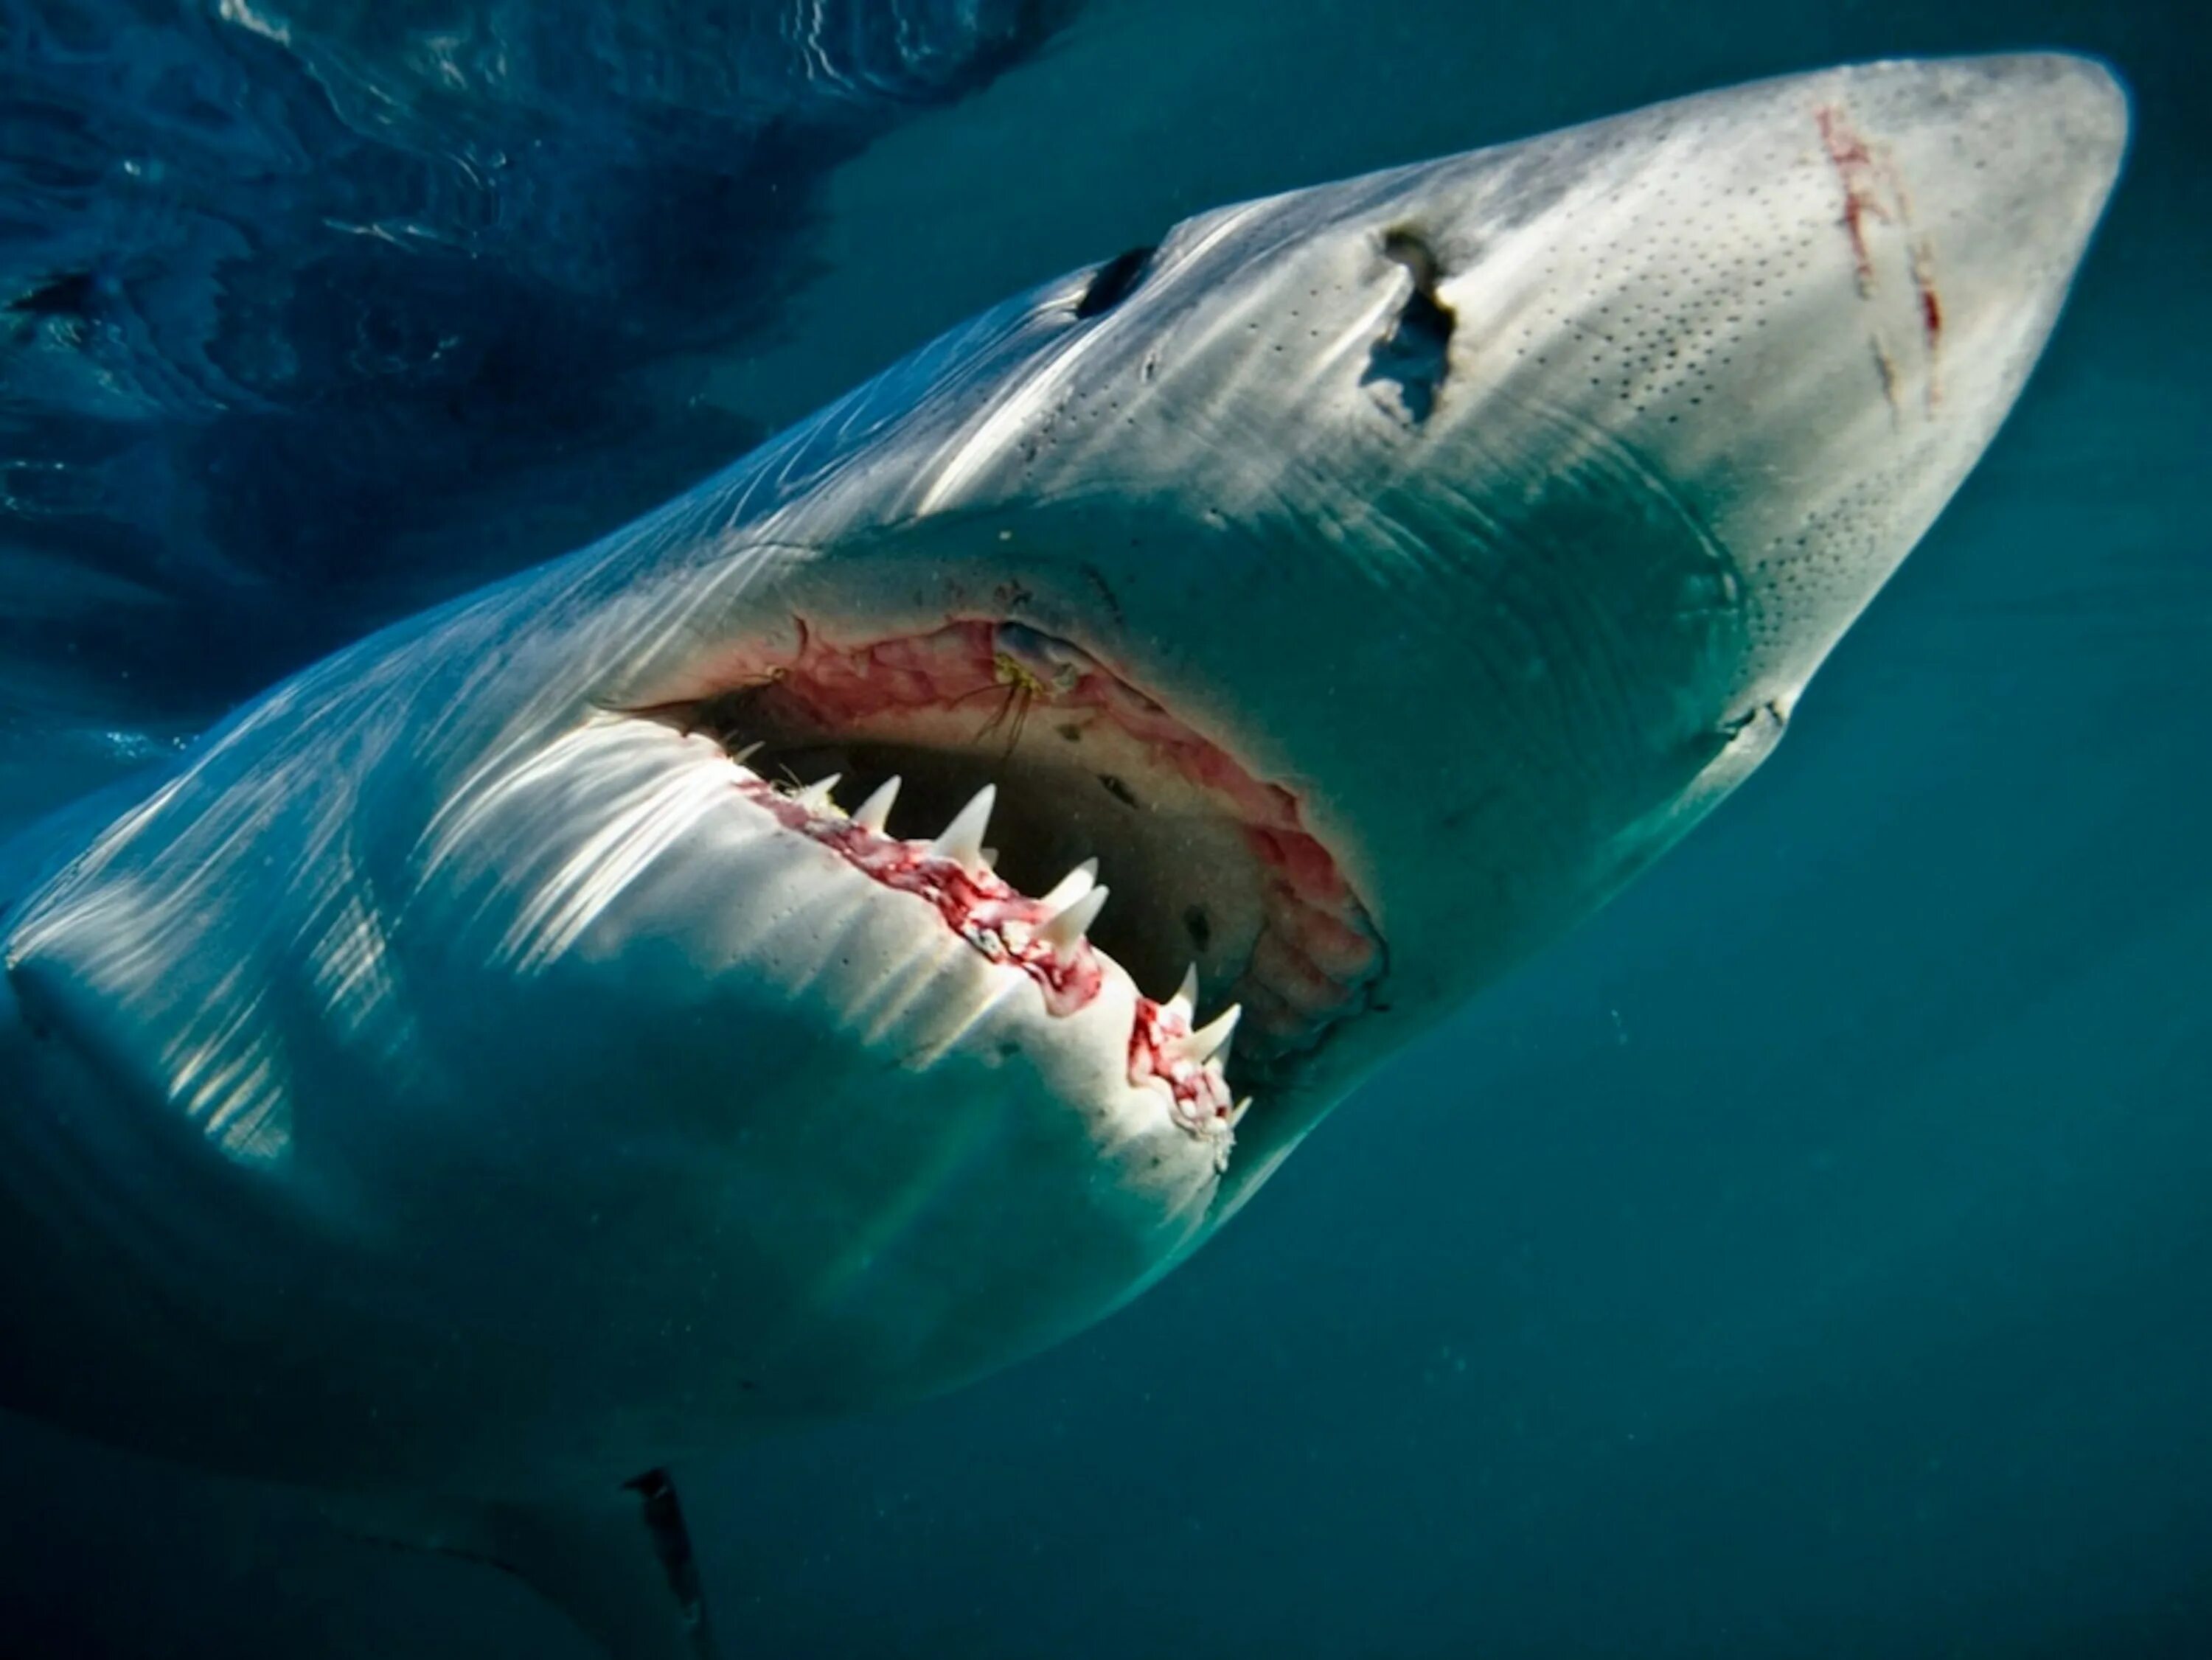 Чернорылая акула. Большая белая акула National Geographic. Большая белая акула 6 метров. Самая большая пасть